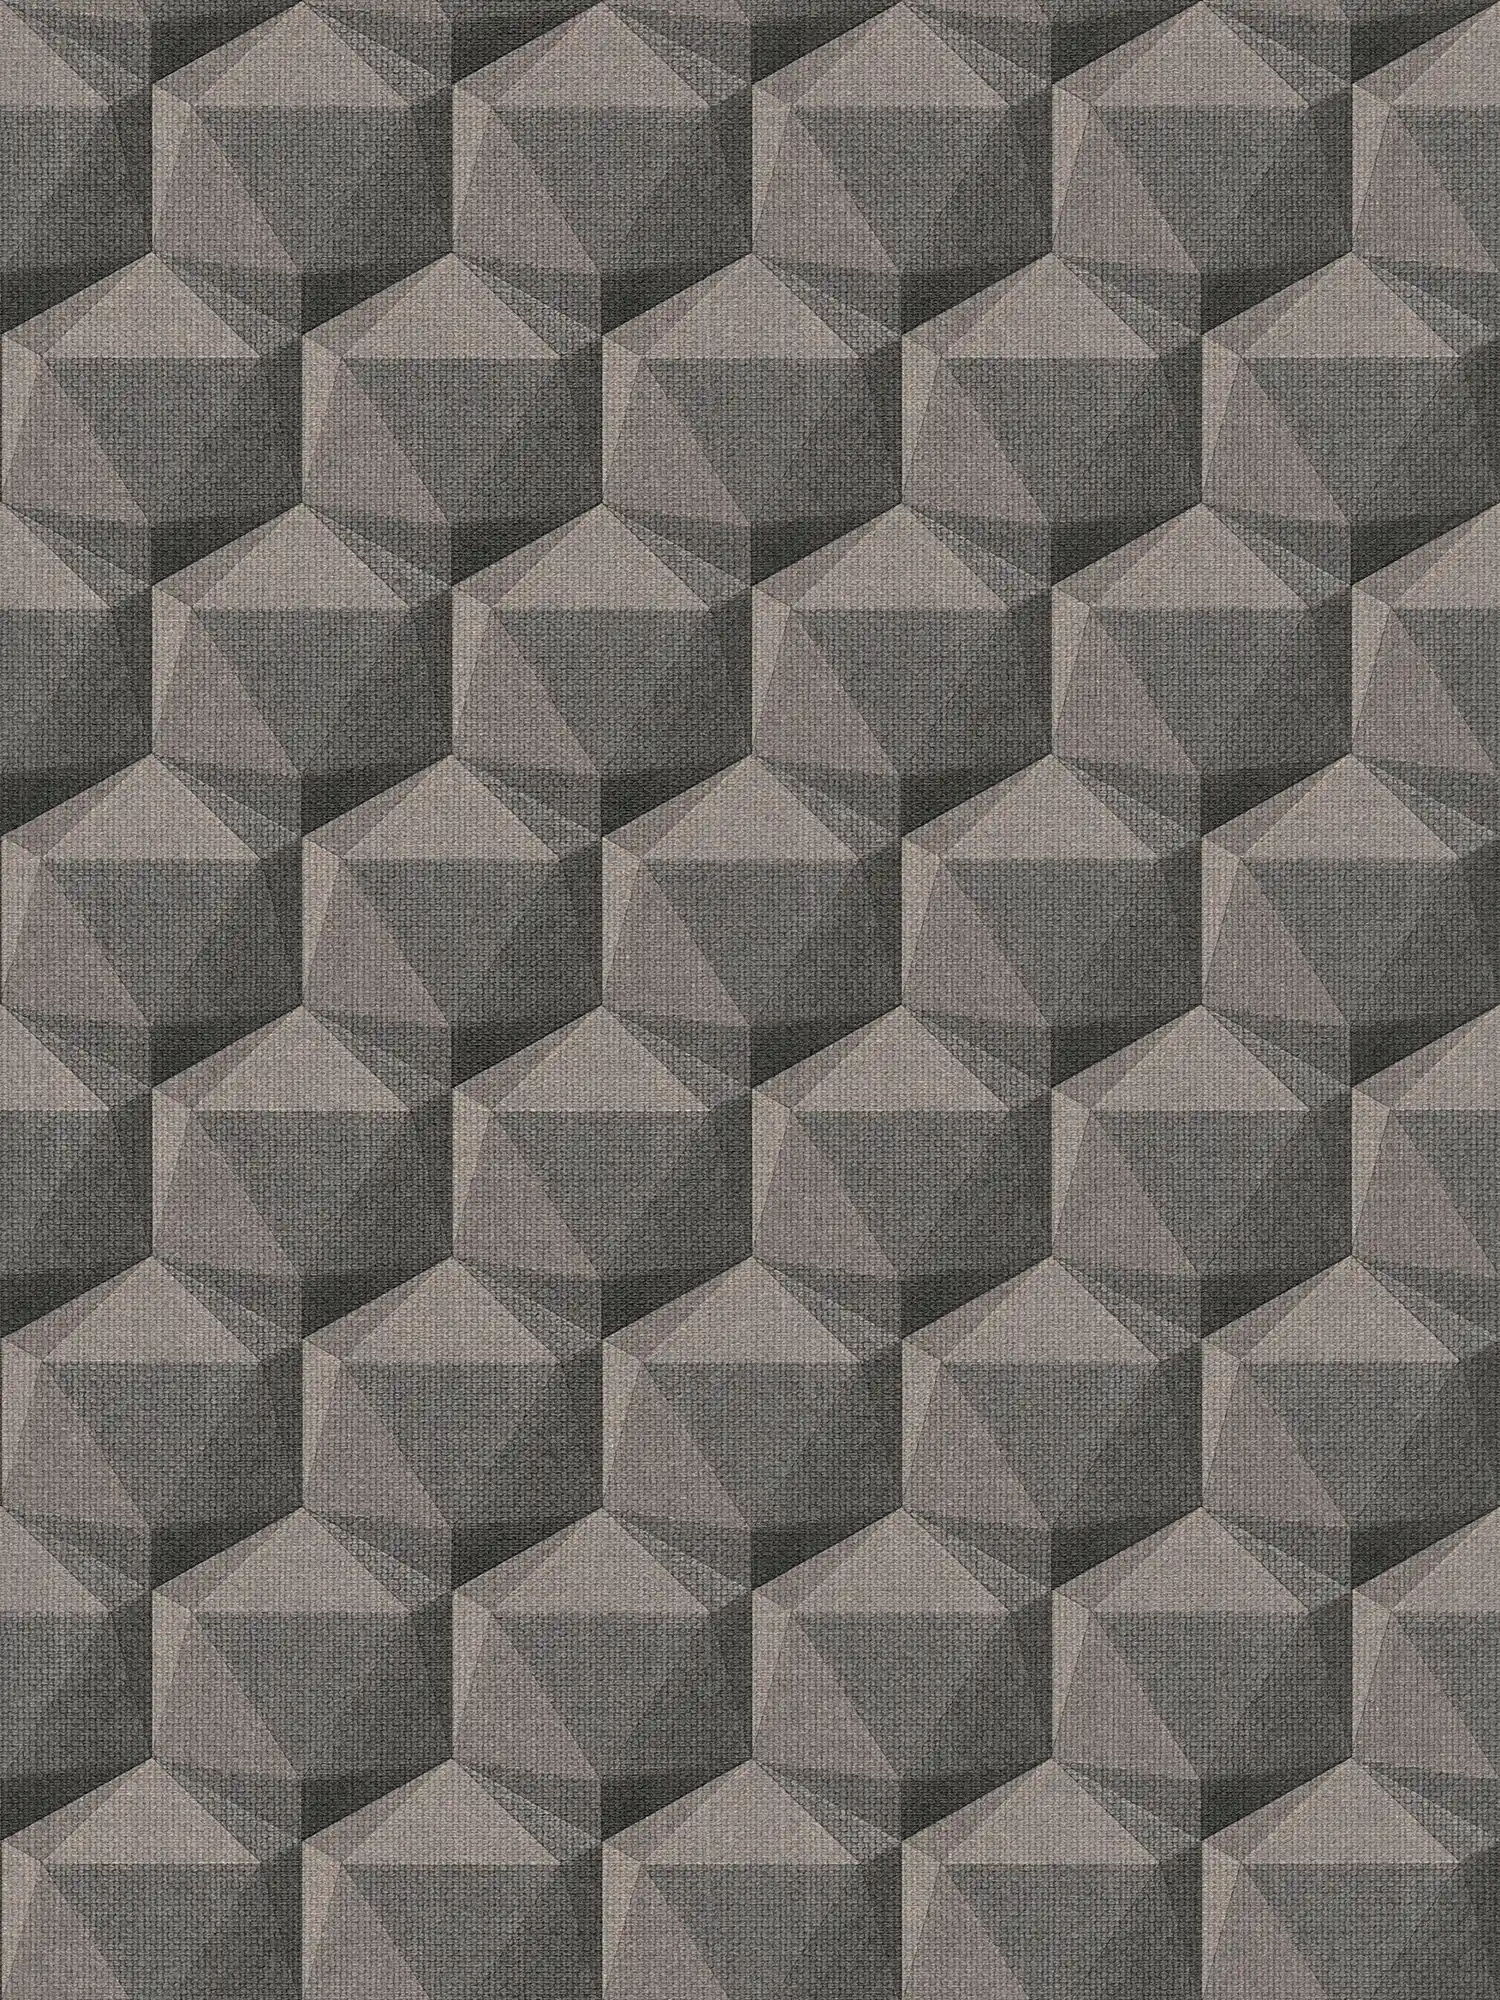 Papel pintado gráfico de óptica 3D con patrón poligonal - gris, beige, negro
